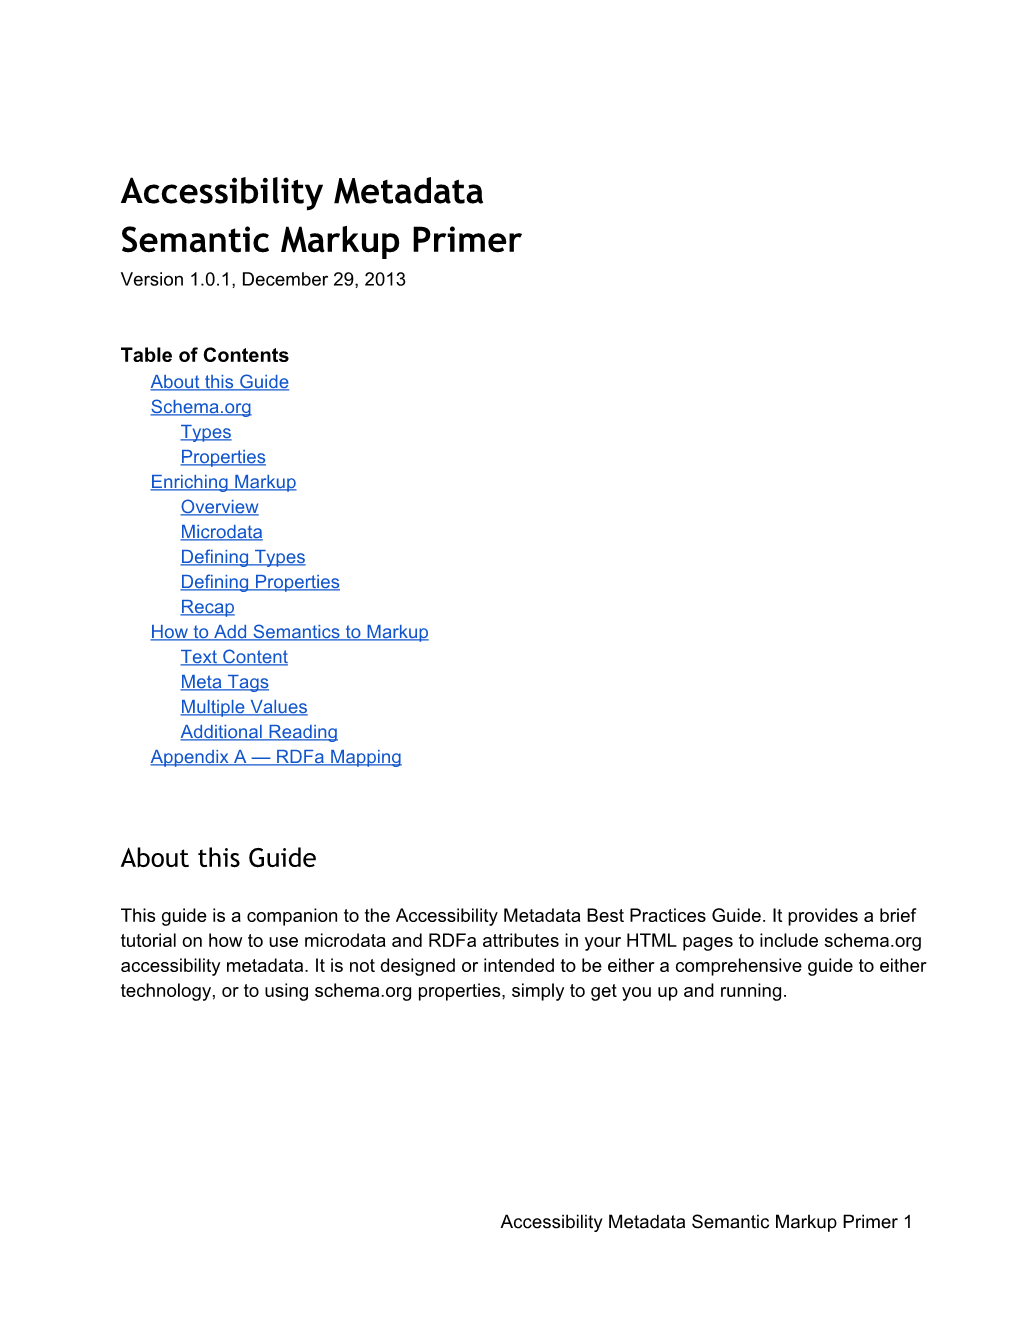 Accessibility Metadata Semantic Markup Primer Version 1.0.1, December 29, 2013